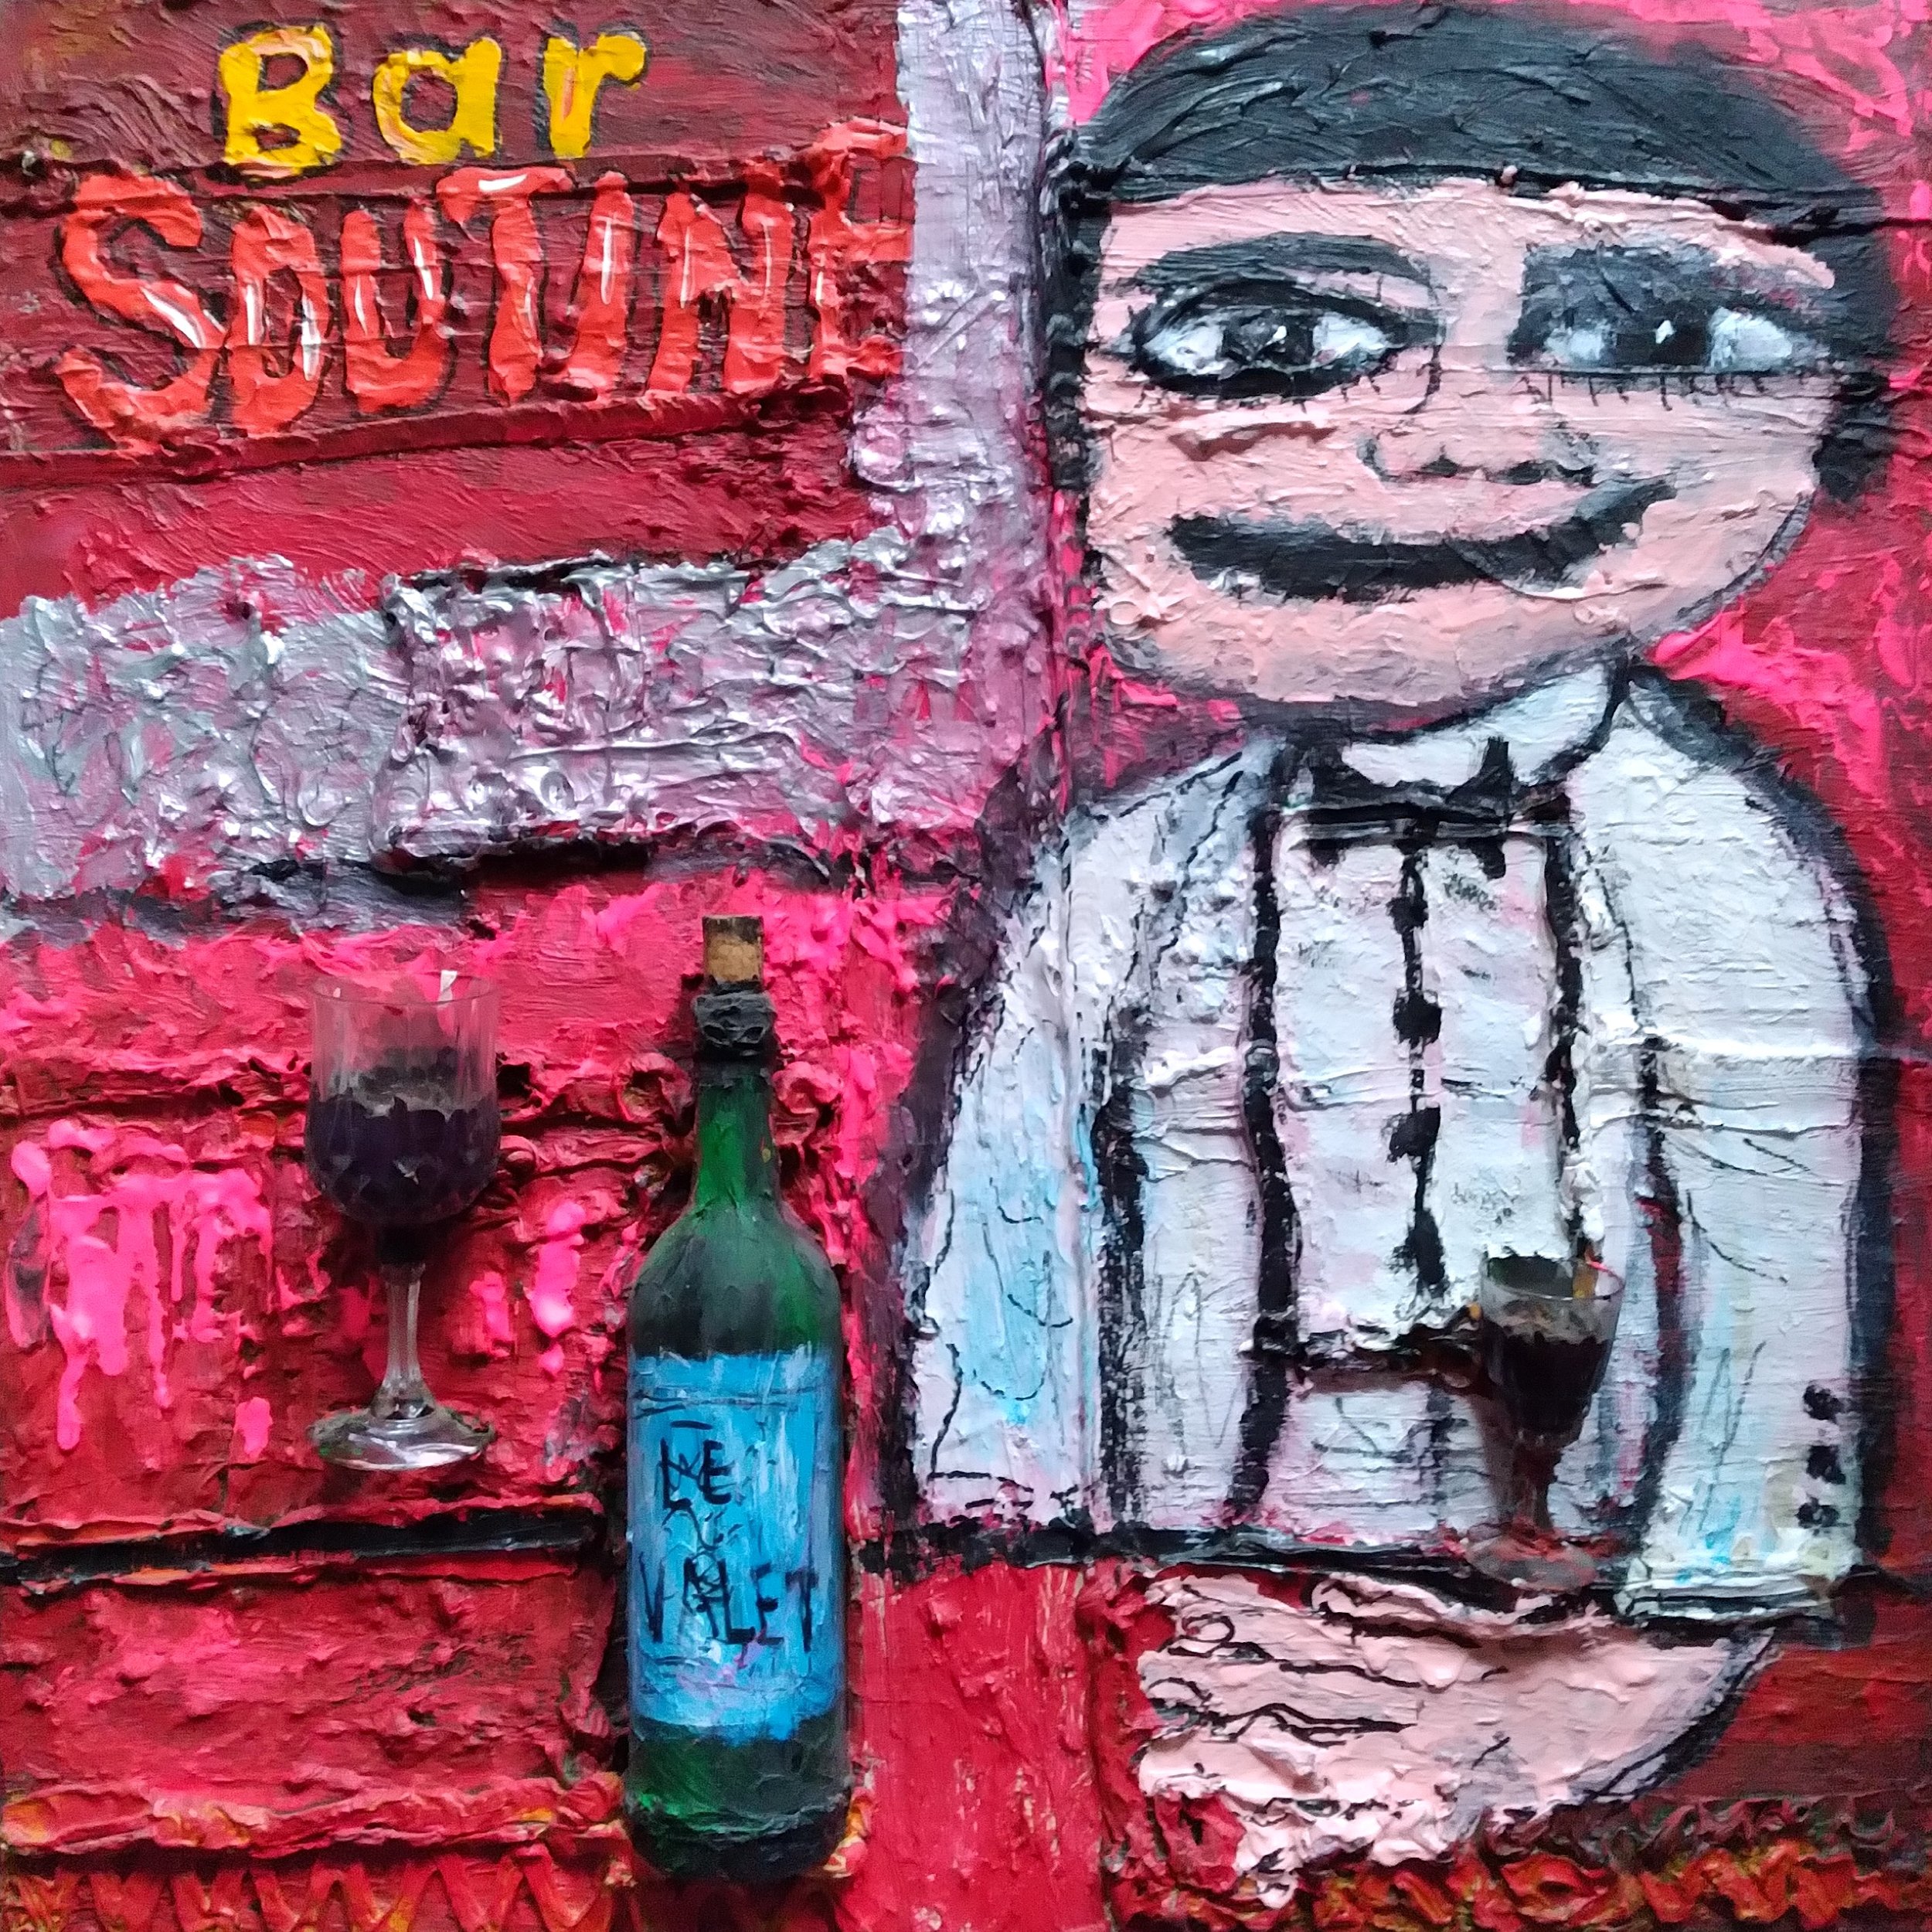 The Bartender, 2003. Oil, acrylic, wine bottle, glasses on canvas. 30" x 28".